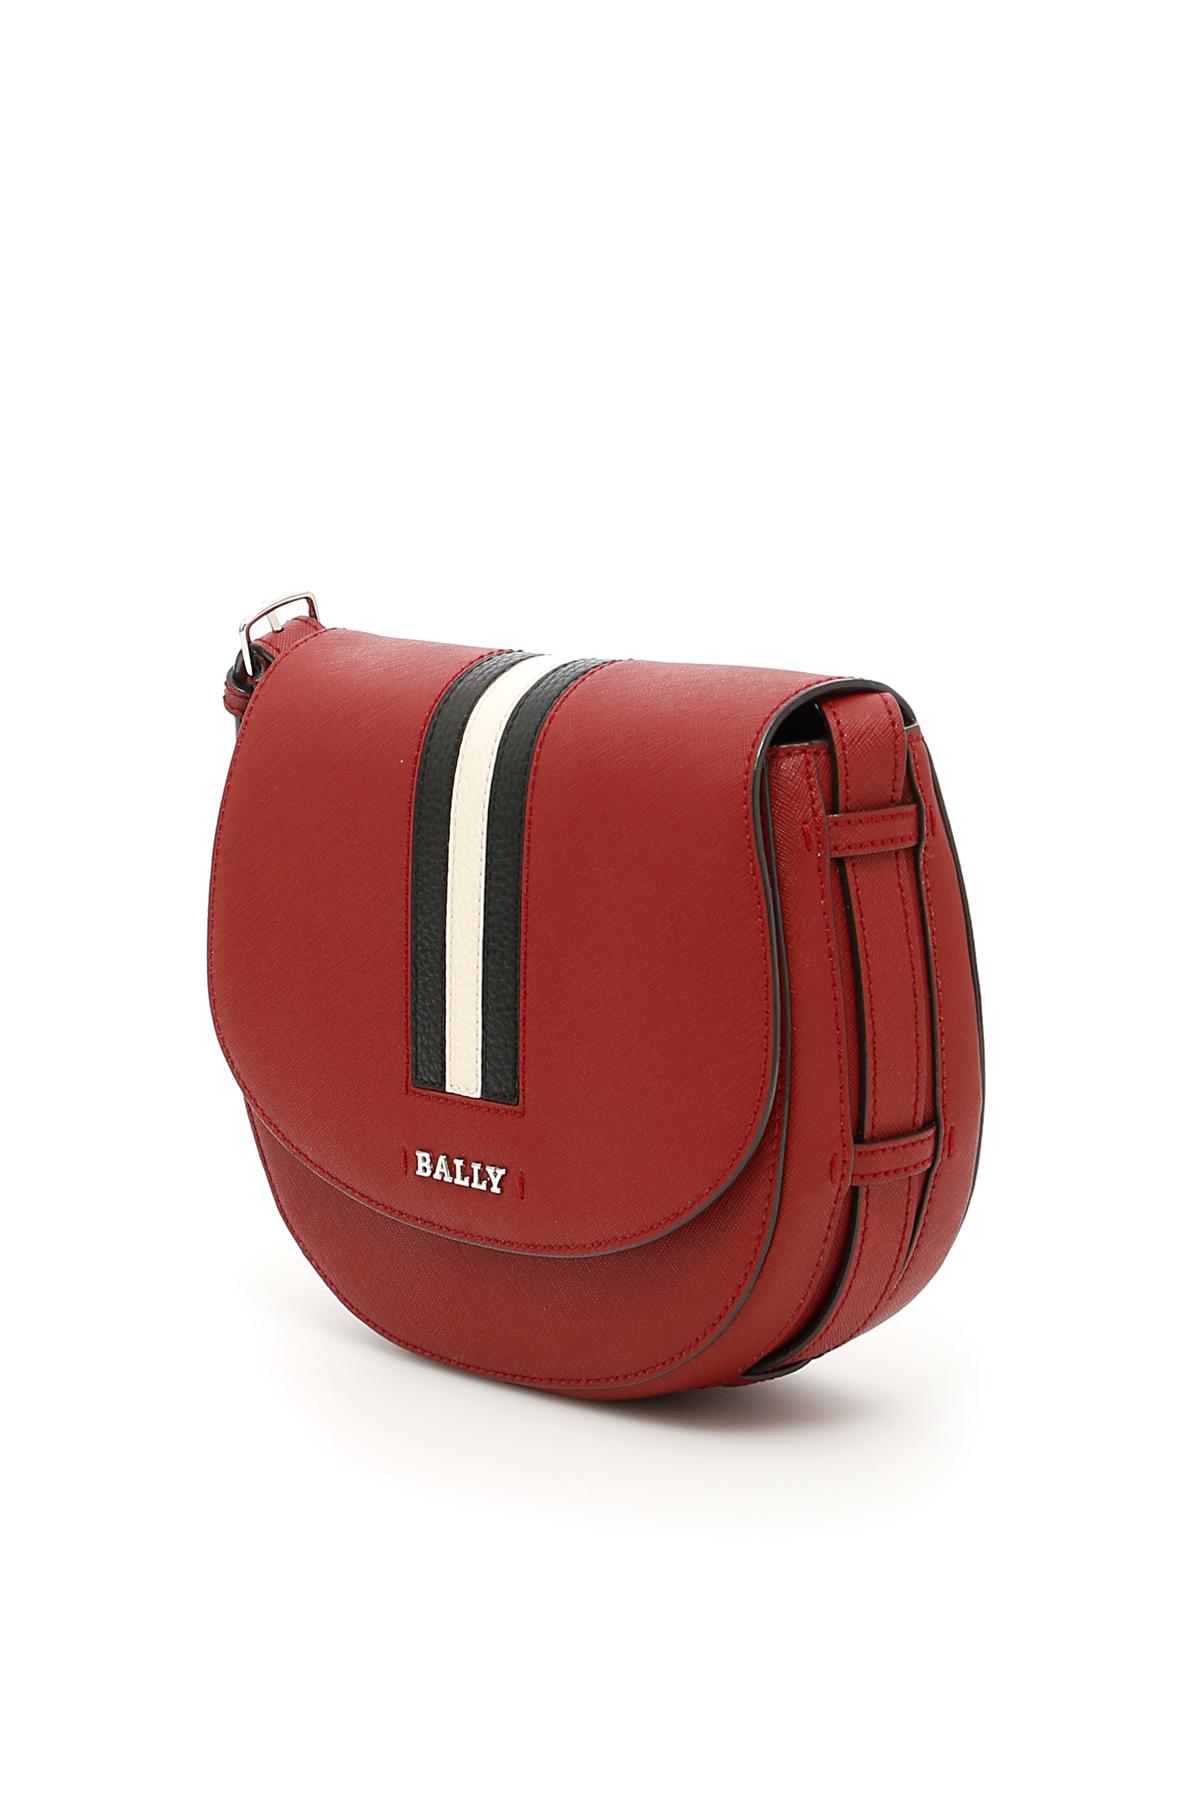 Bally Leather Crossbody Bags Shoulder Bag Women in Garnet 16 (Red) - Lyst